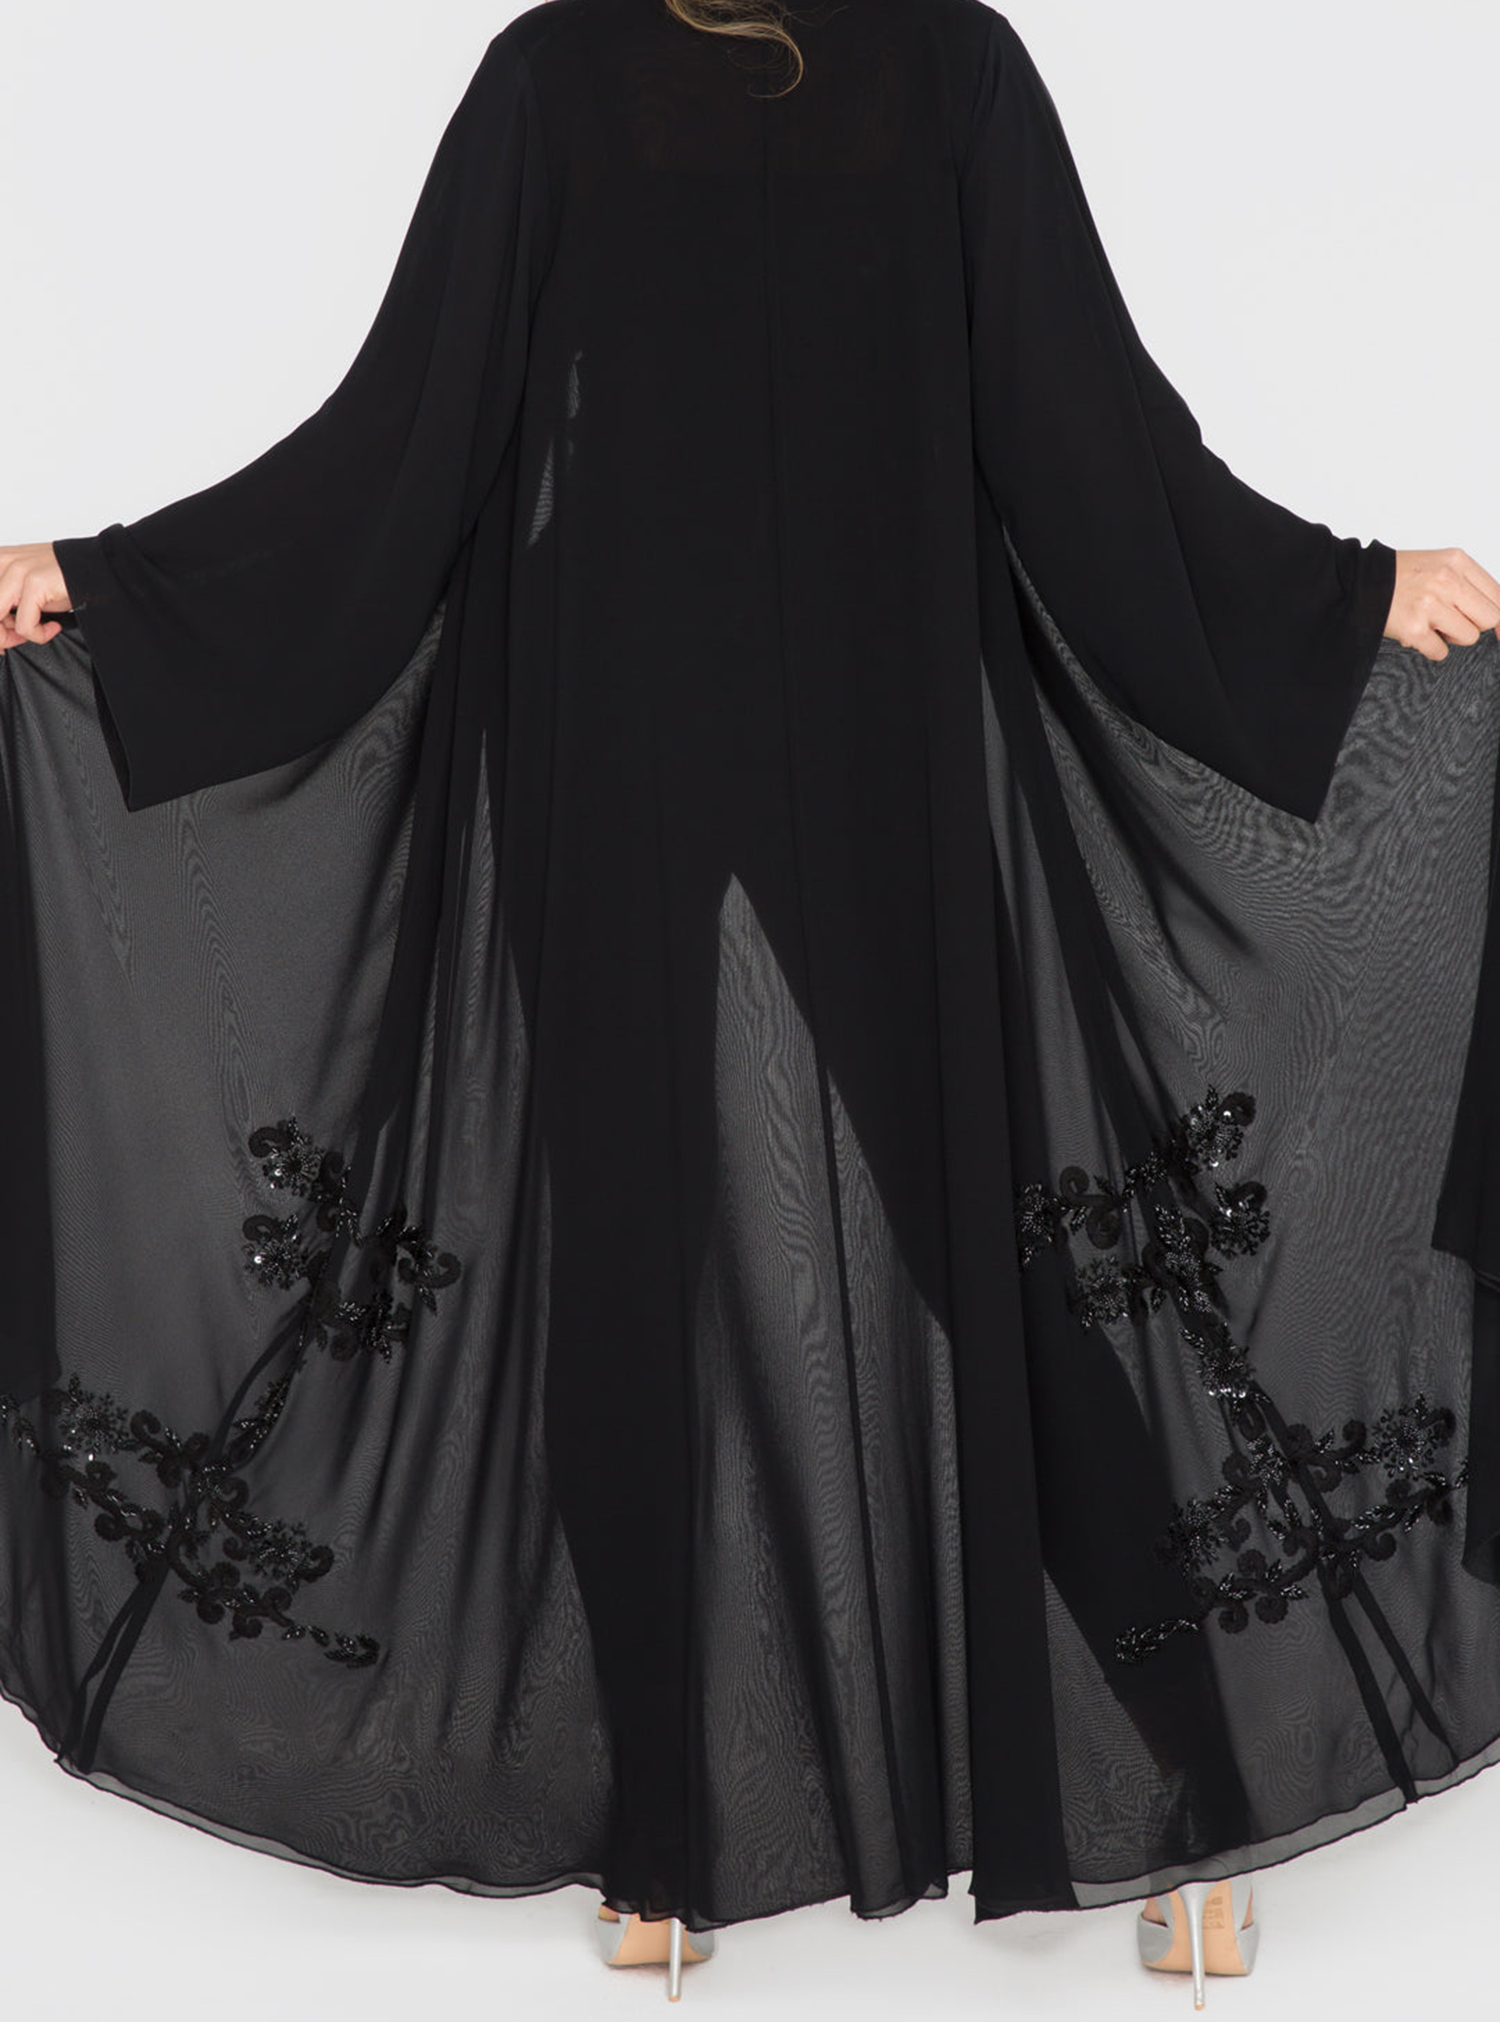 NOA5341 Abaya Black sheer Abaya with embellishments. Abayas from at Boksha